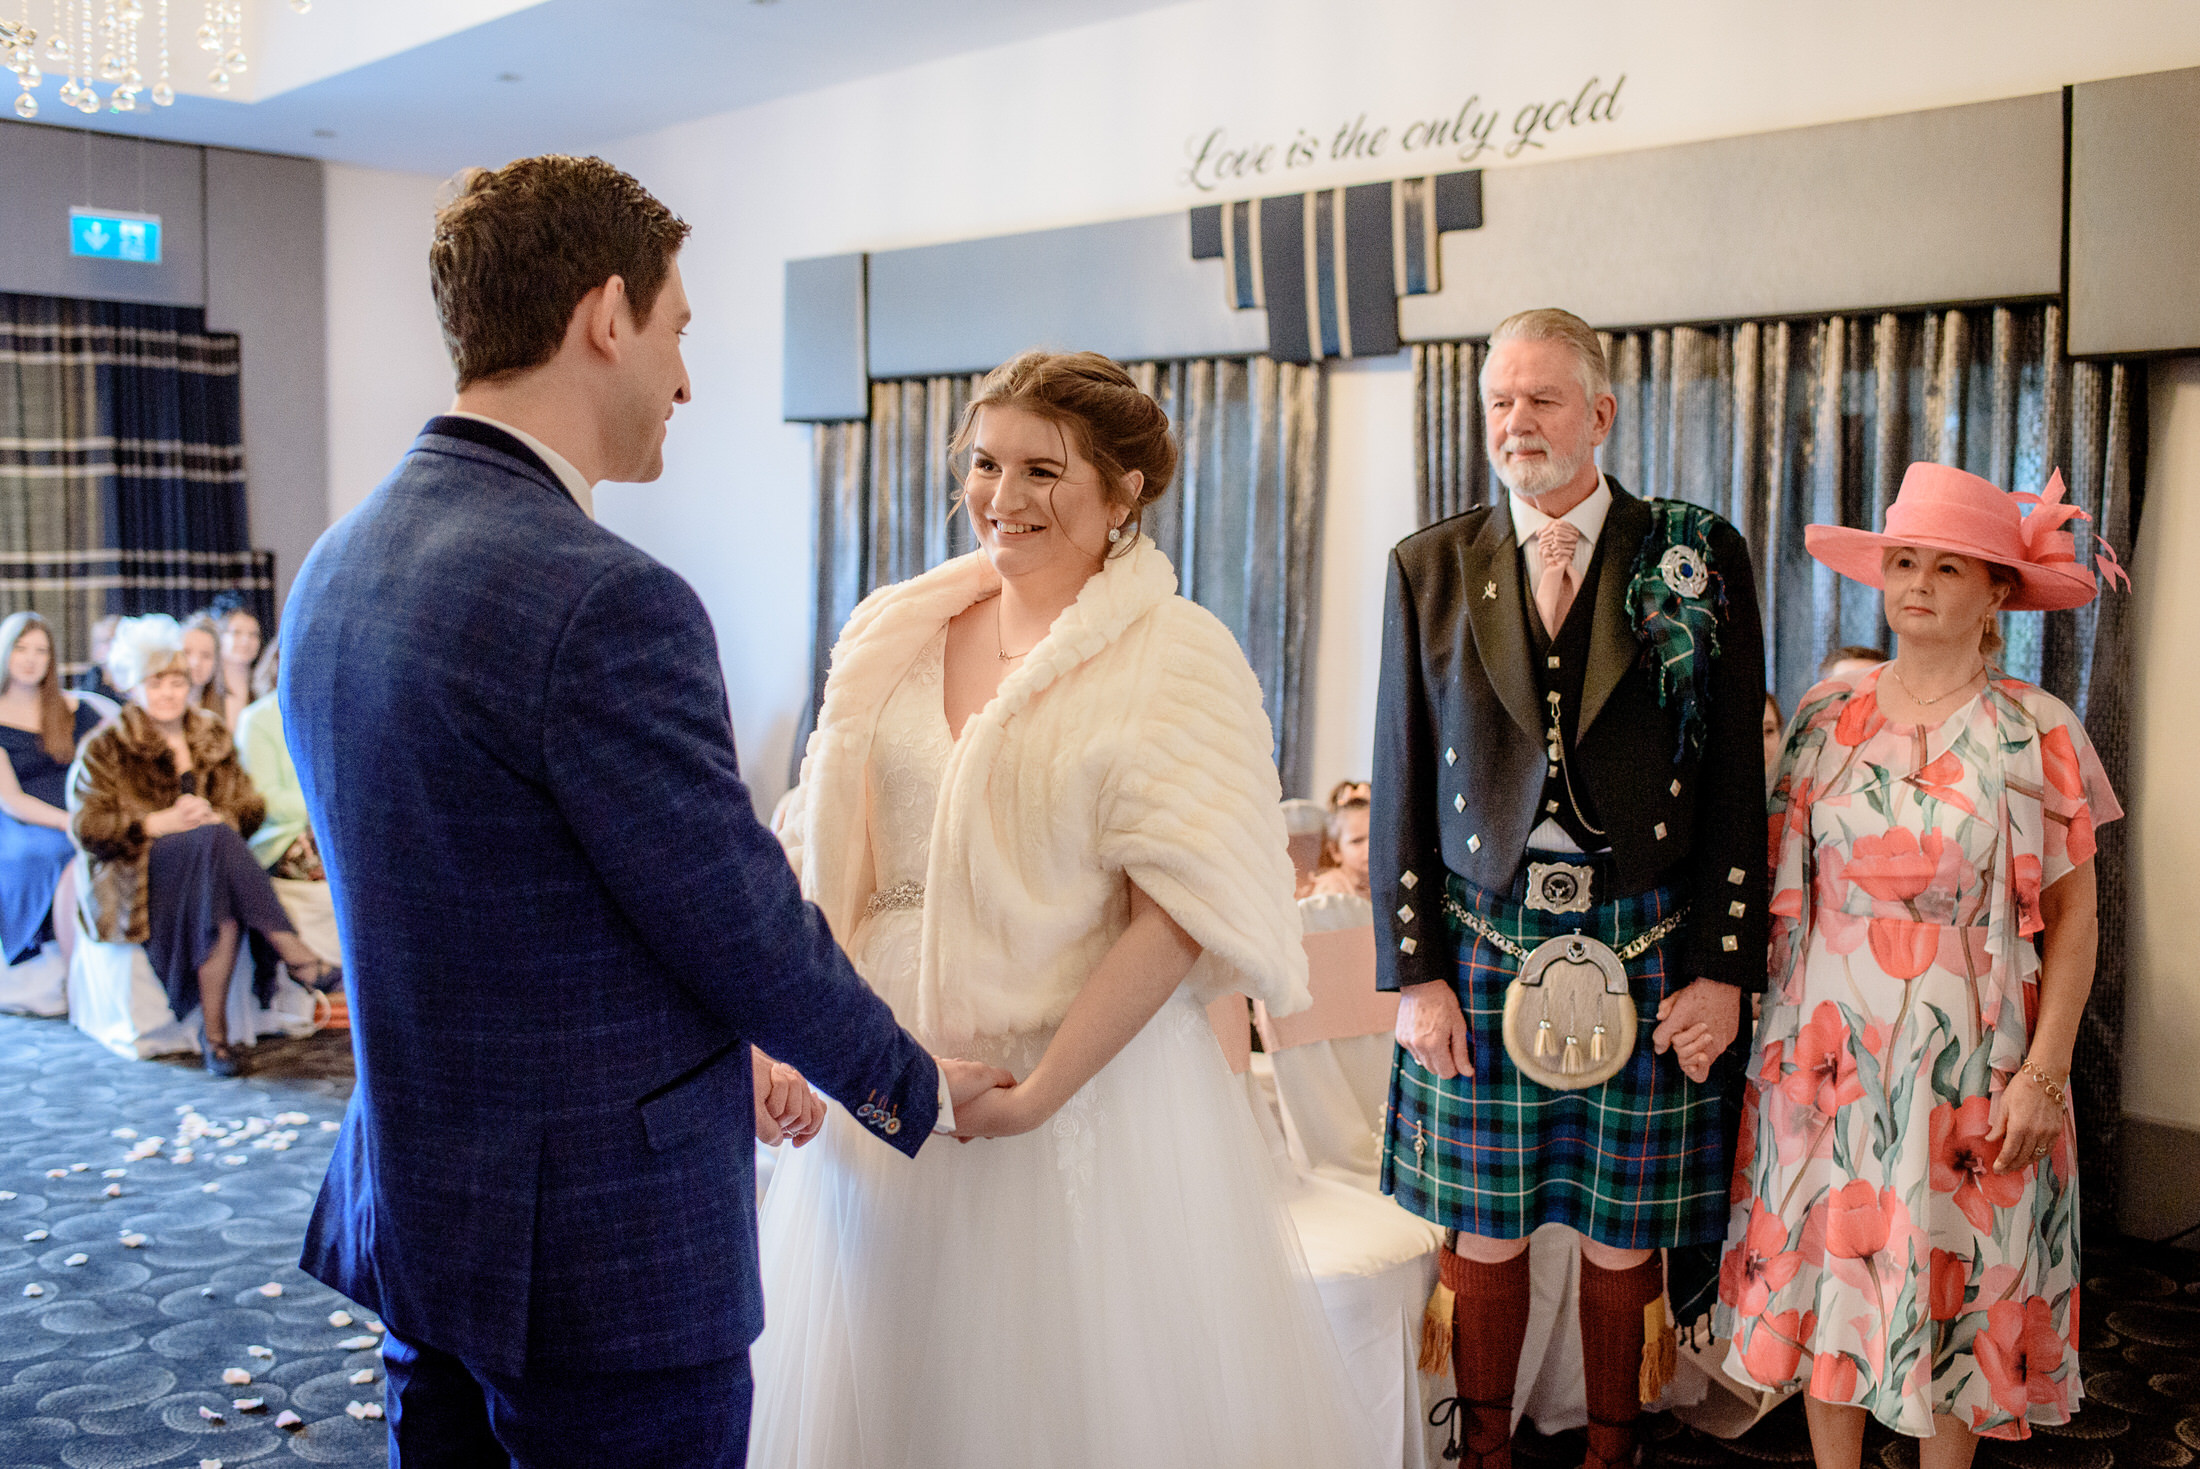 A bride and groom exchange vows at Brackenborough Hotel wedding.